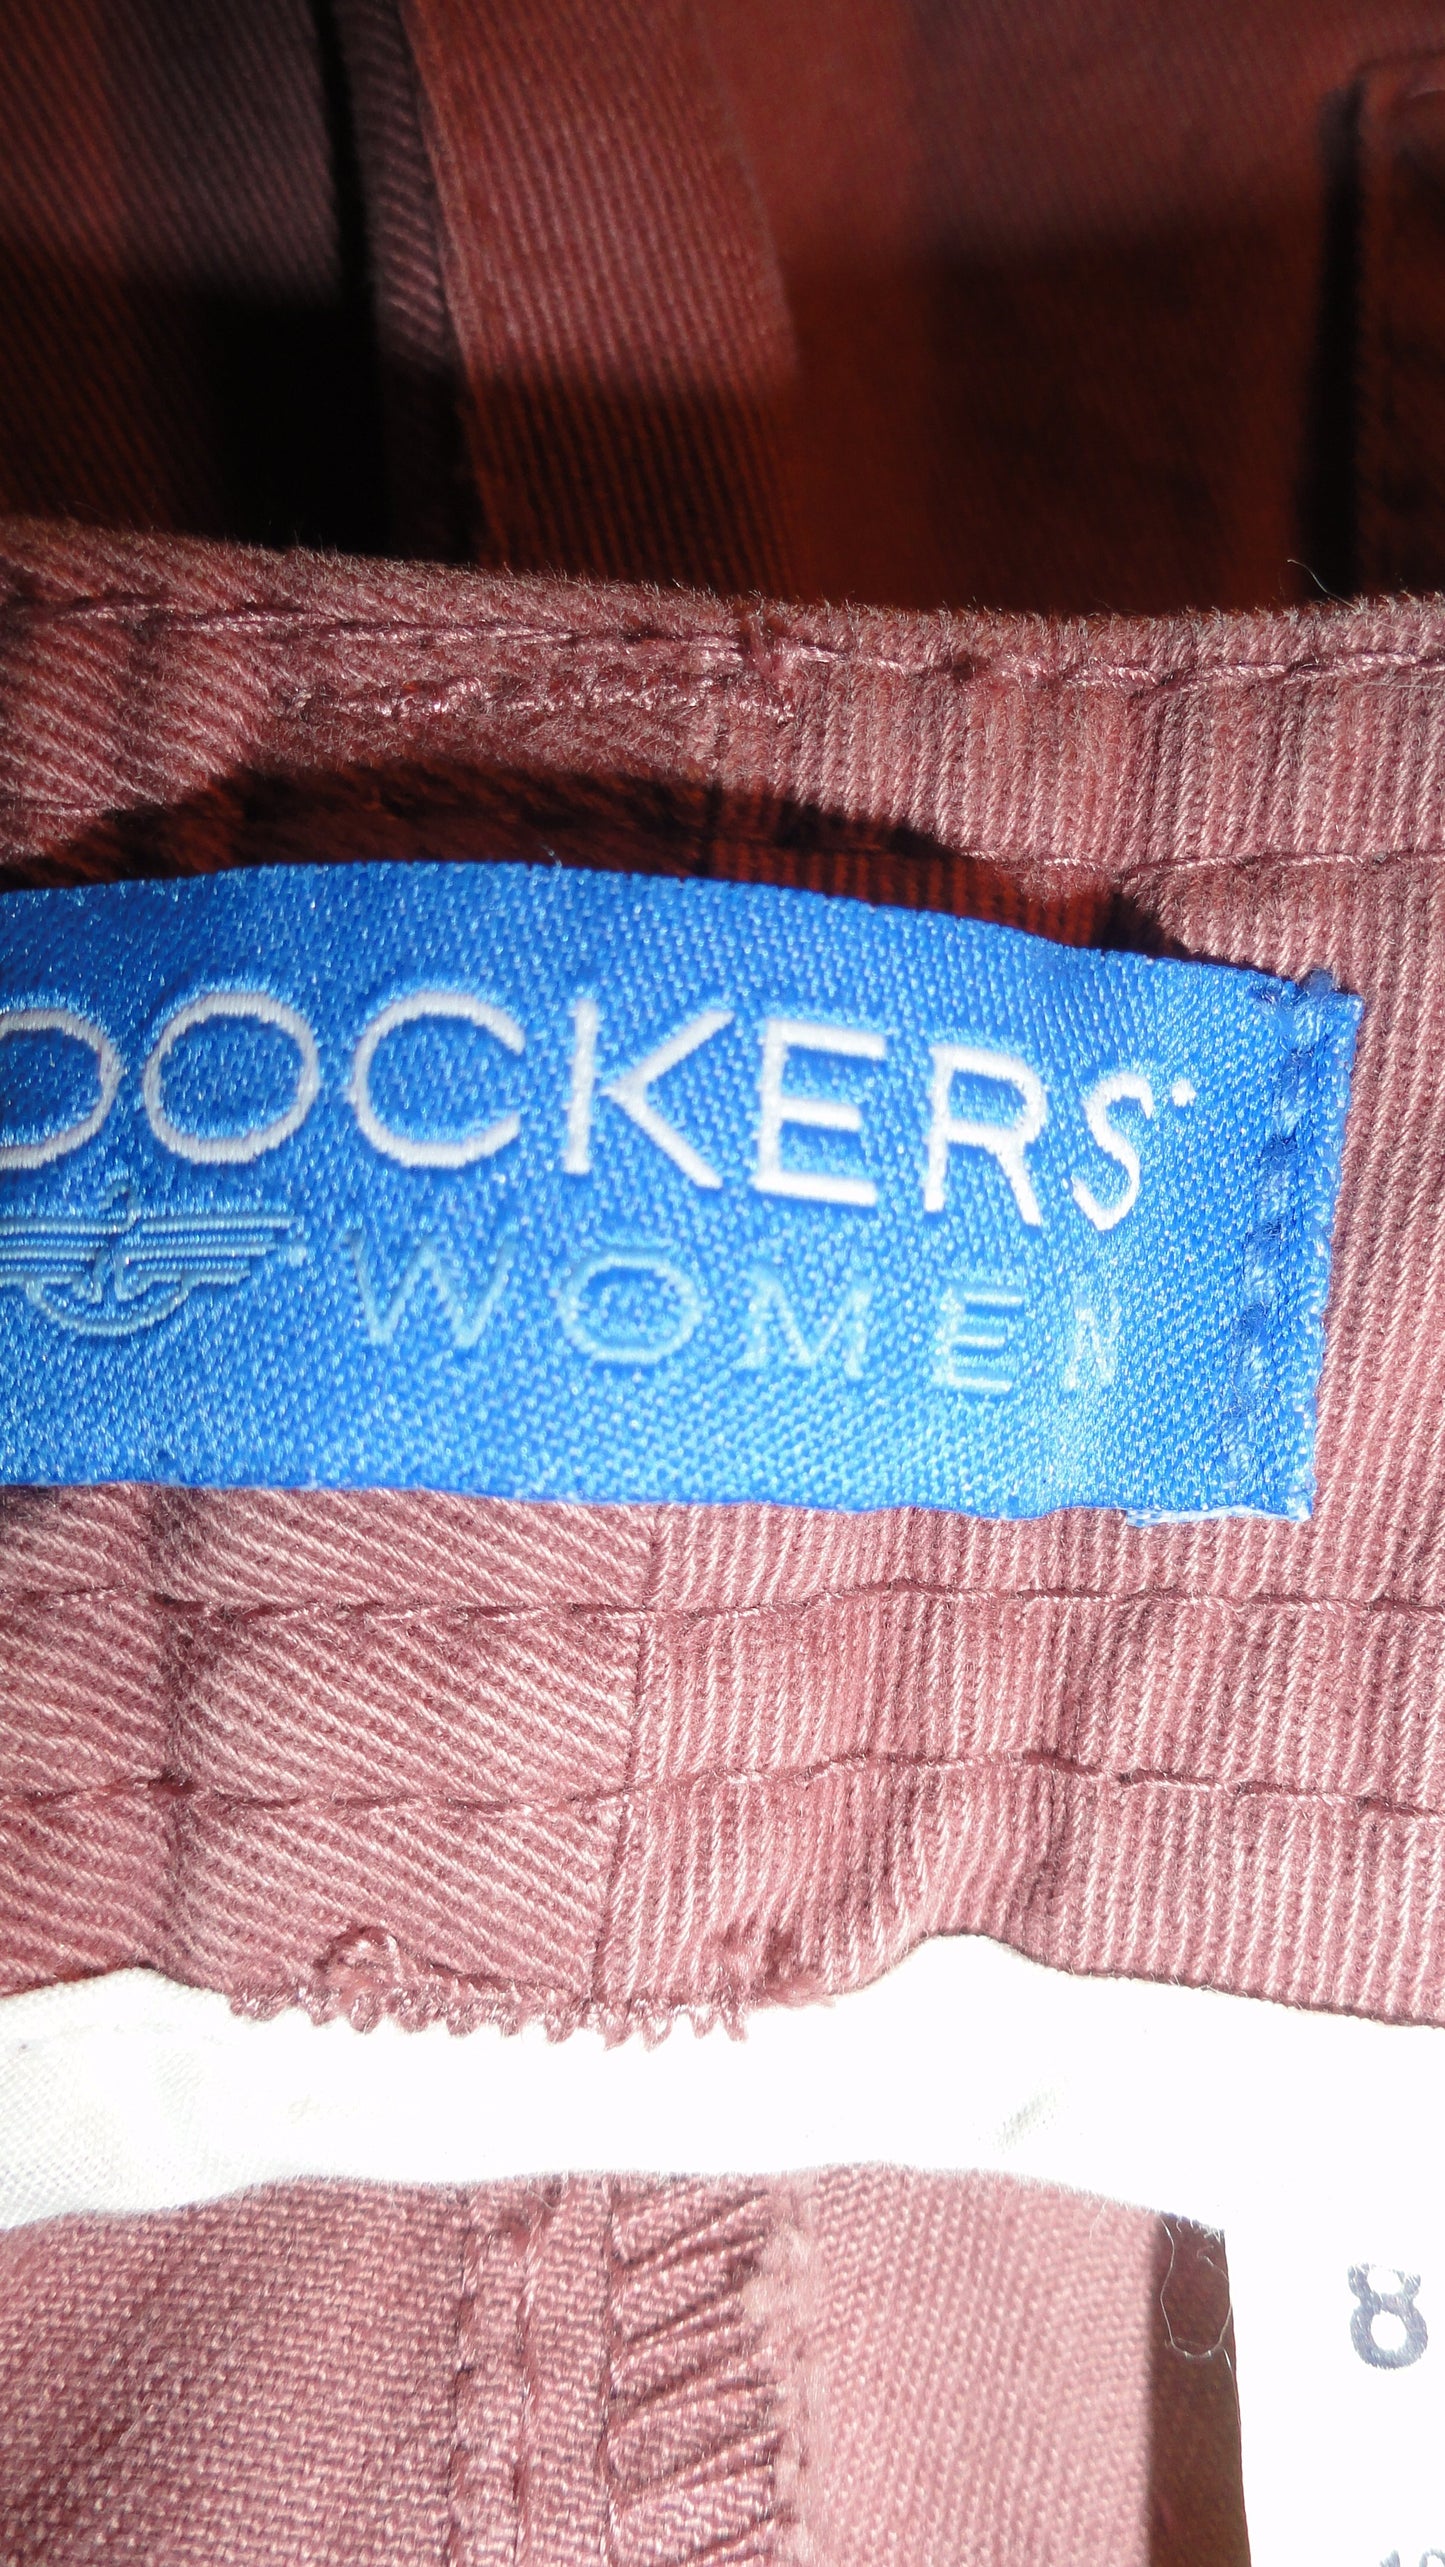 Dockers Womens Pants Light Brown Size 8 Medium NWT SKU 000092